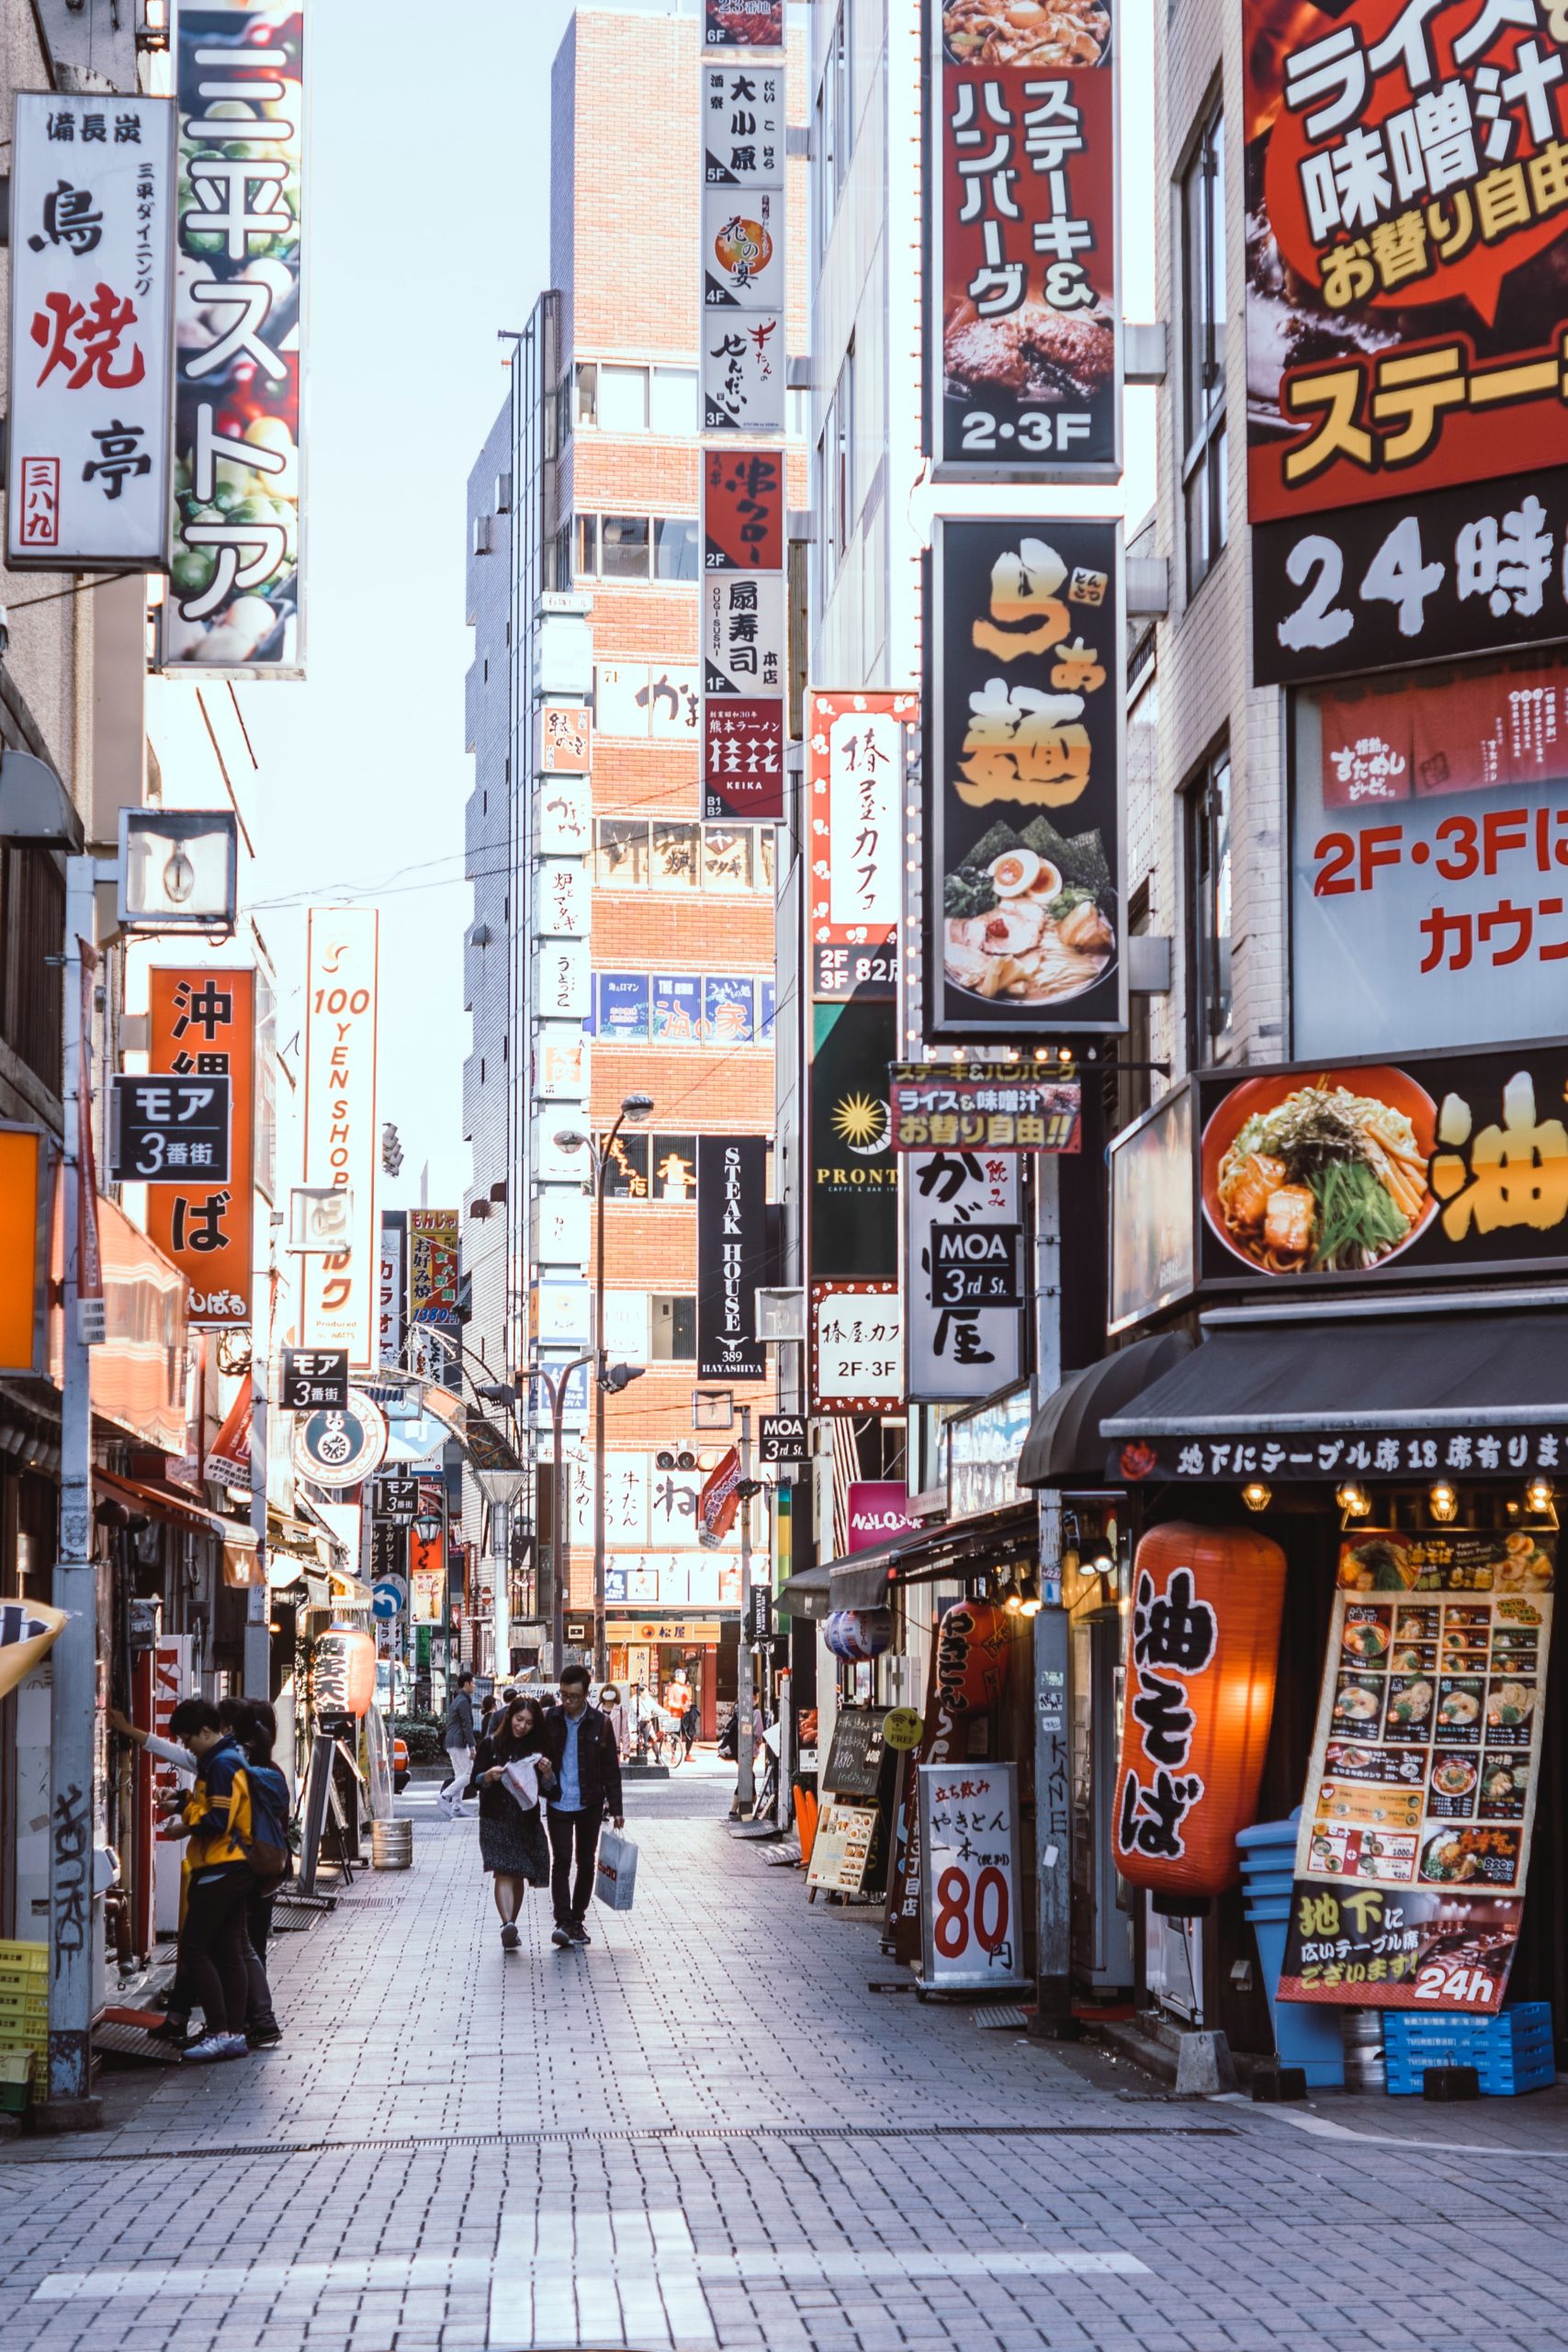 Photo of a side street in Japan